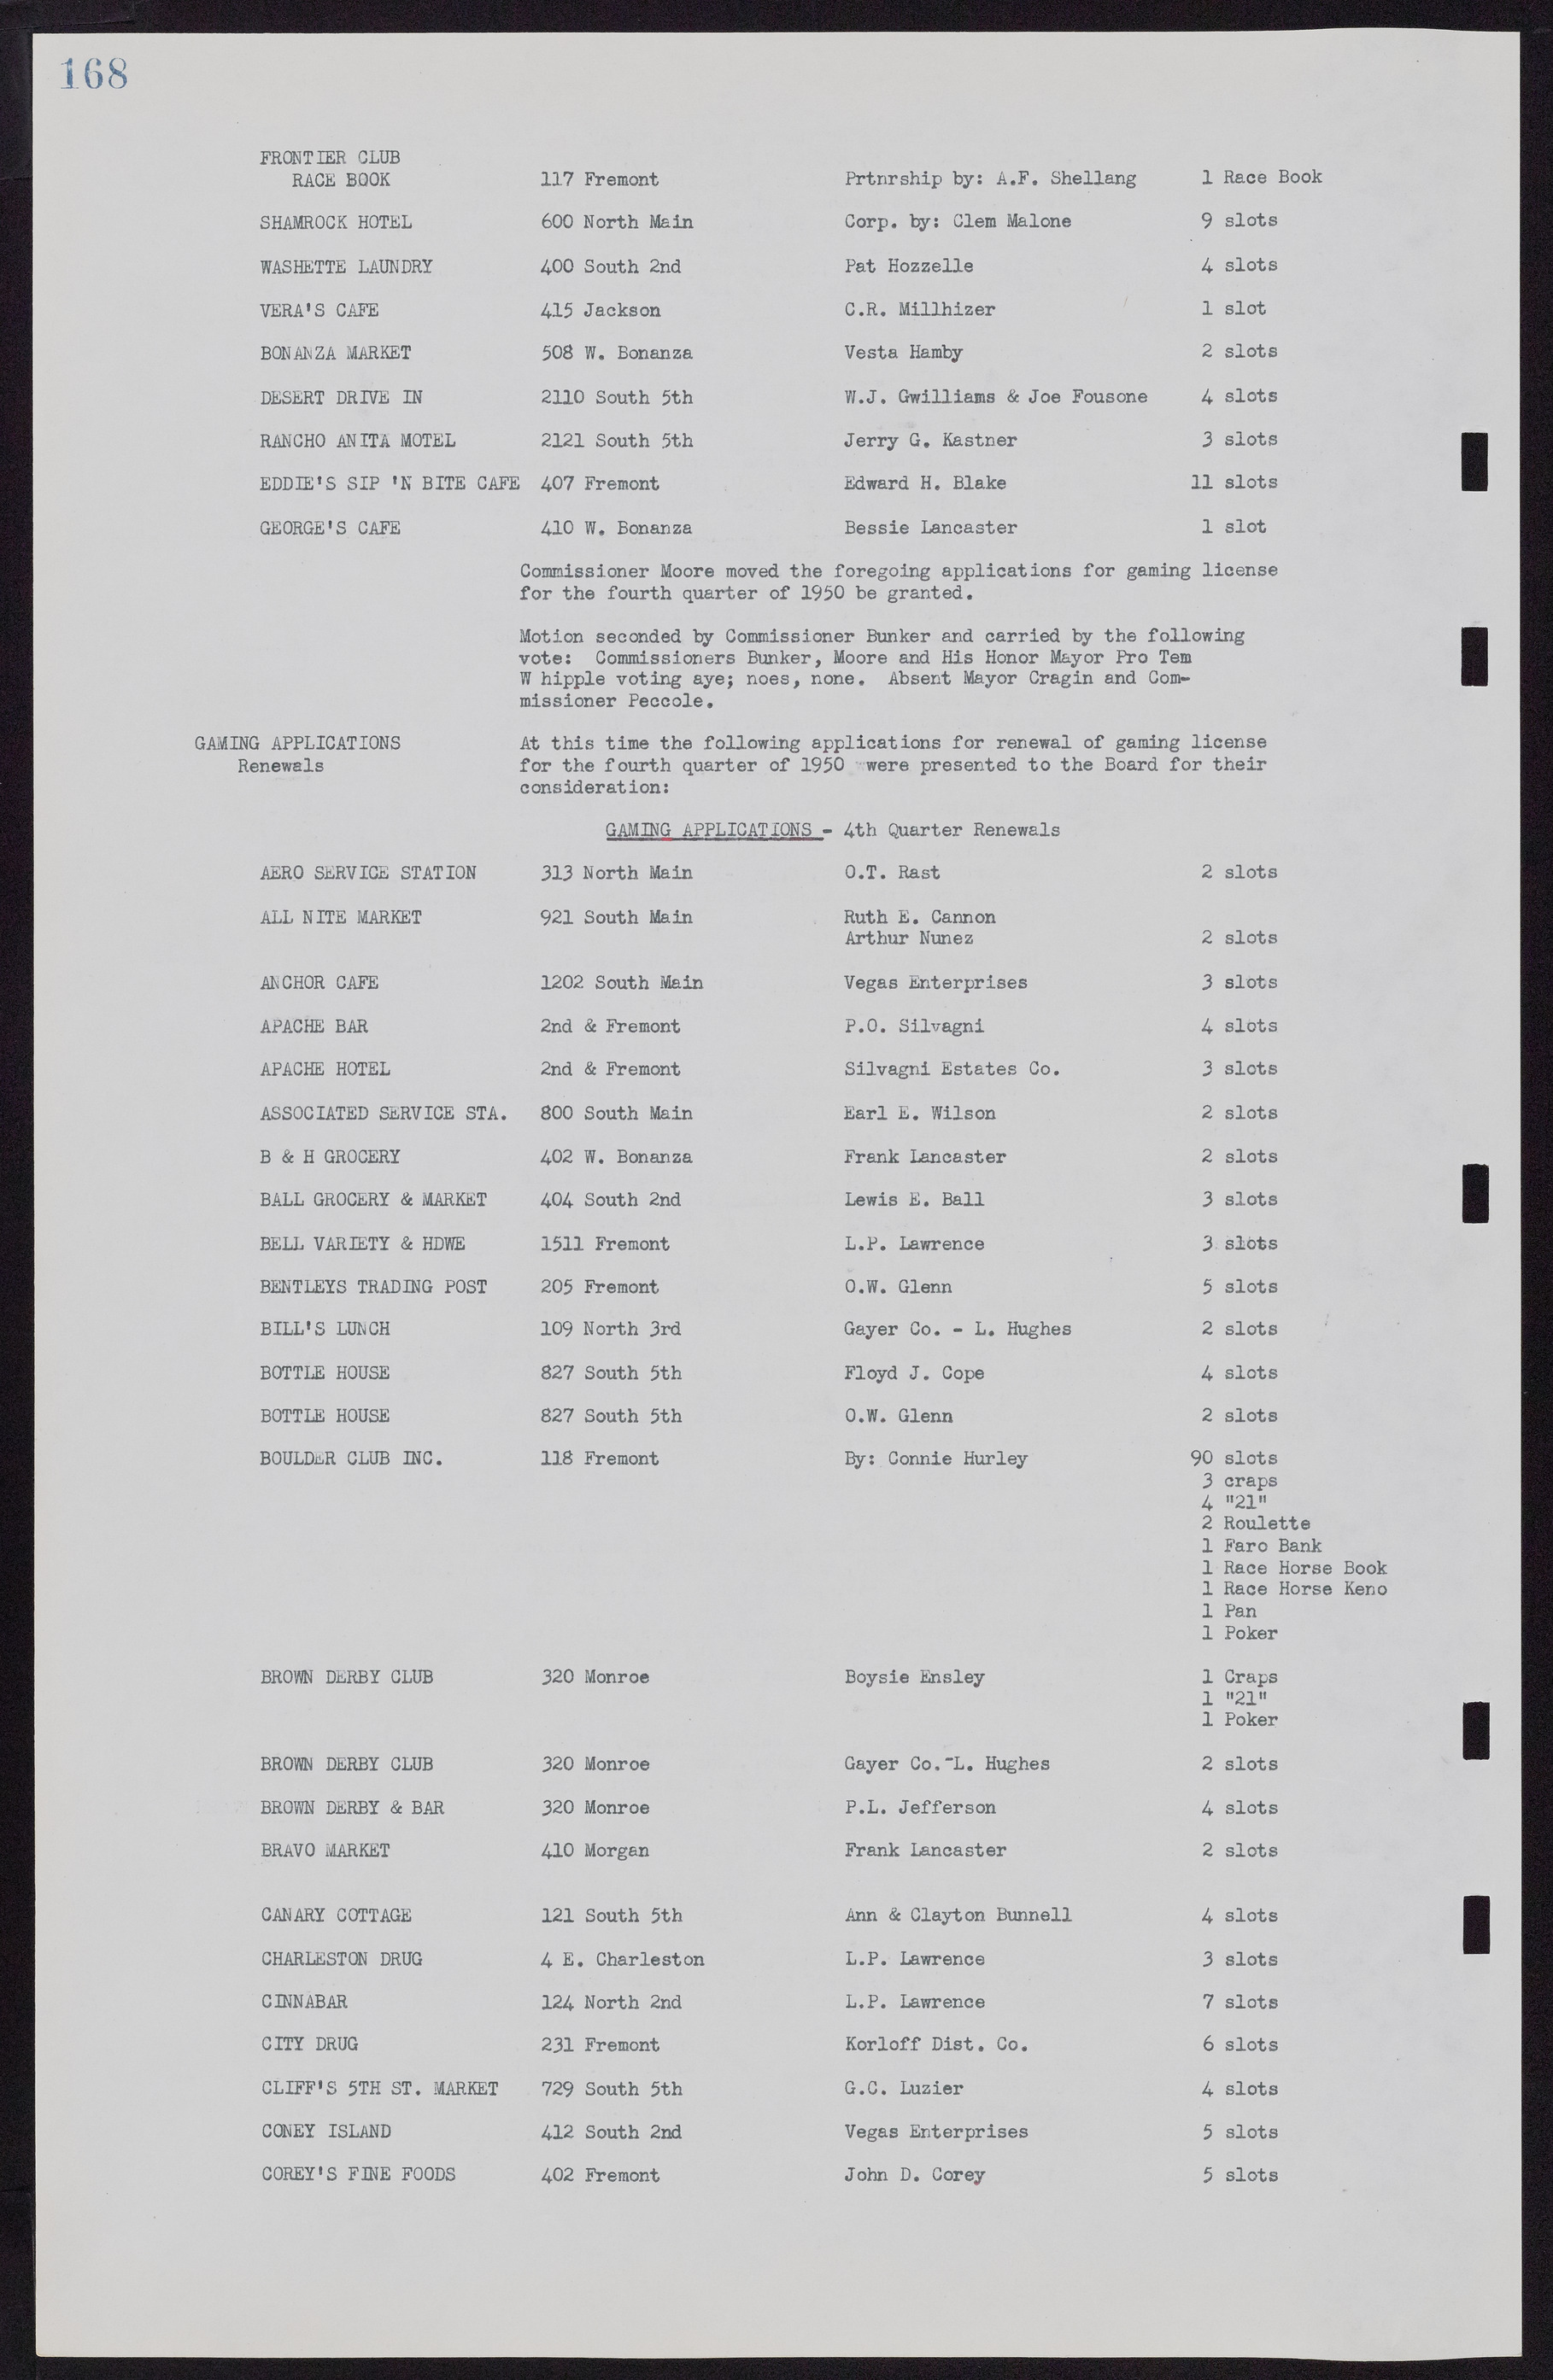 Las Vegas City Commission Minutes, November 7, 1949 to May 21, 1952, lvc000007-178